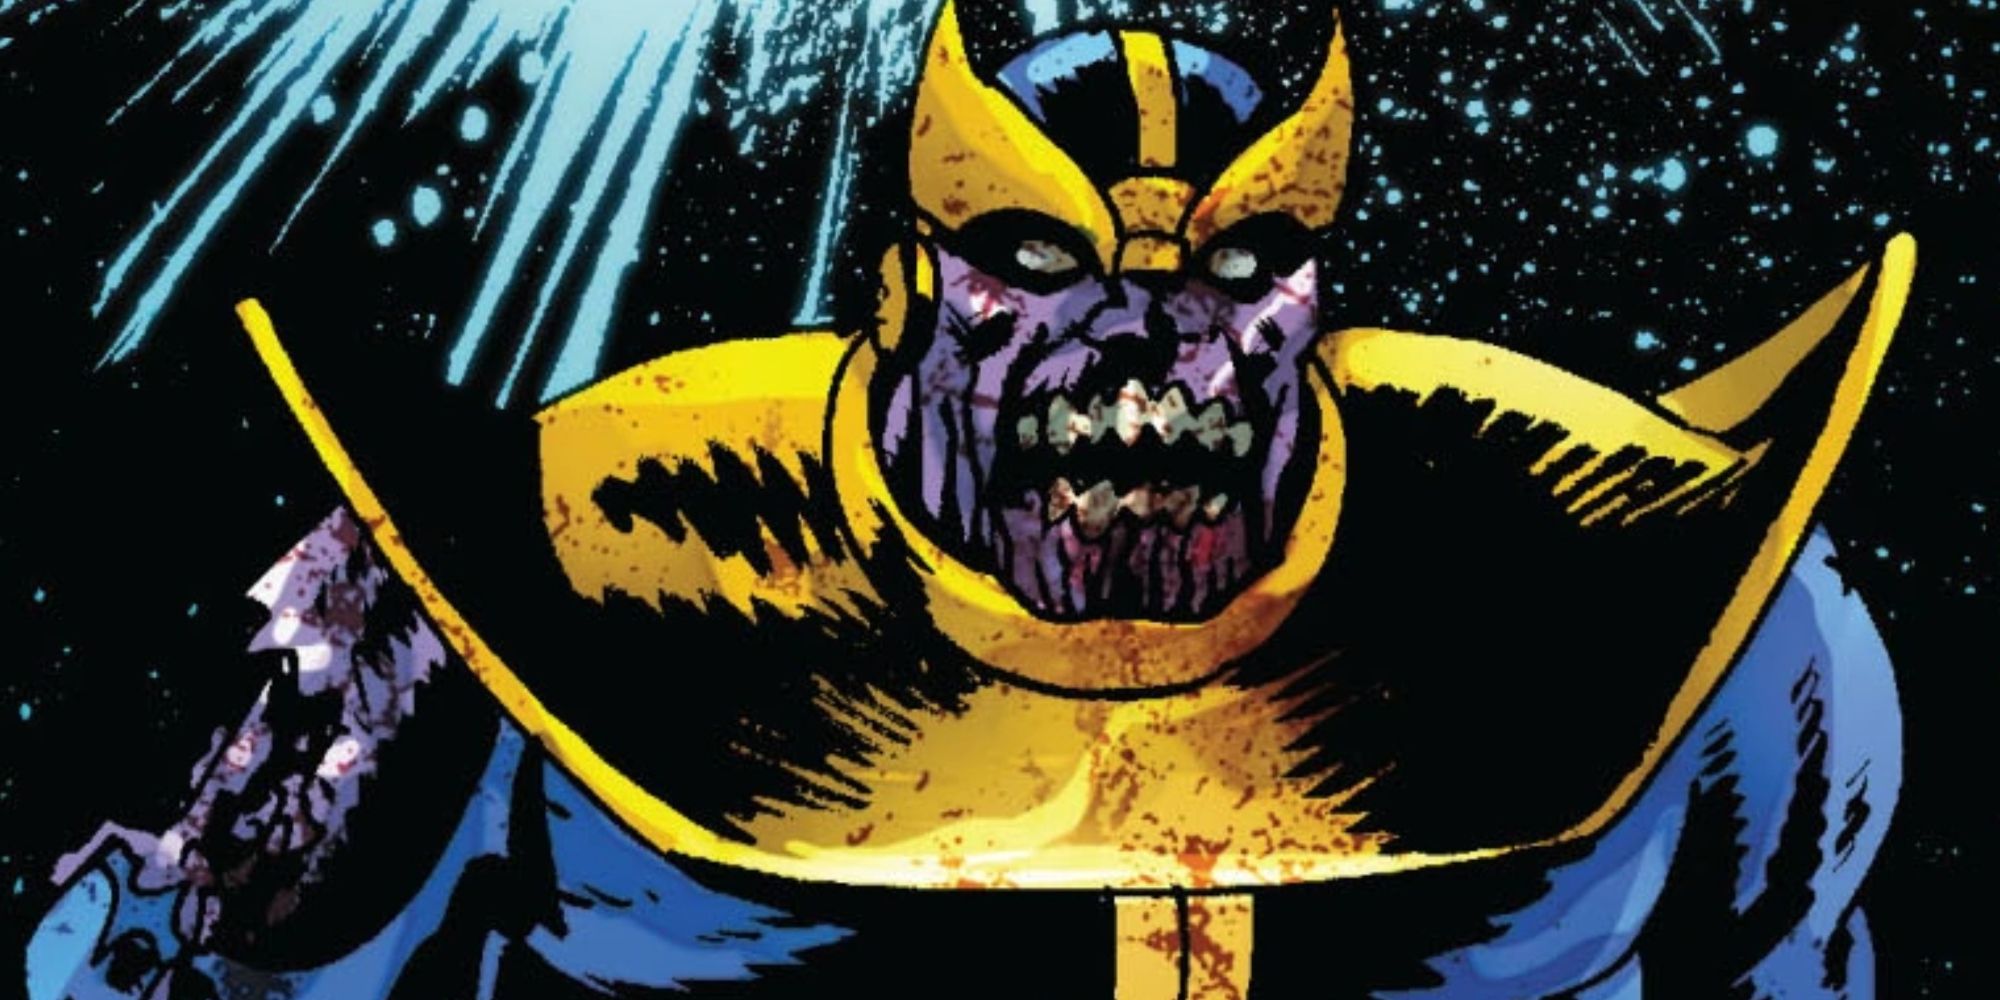 Zombie Thanos attacks in Marvel Comics.